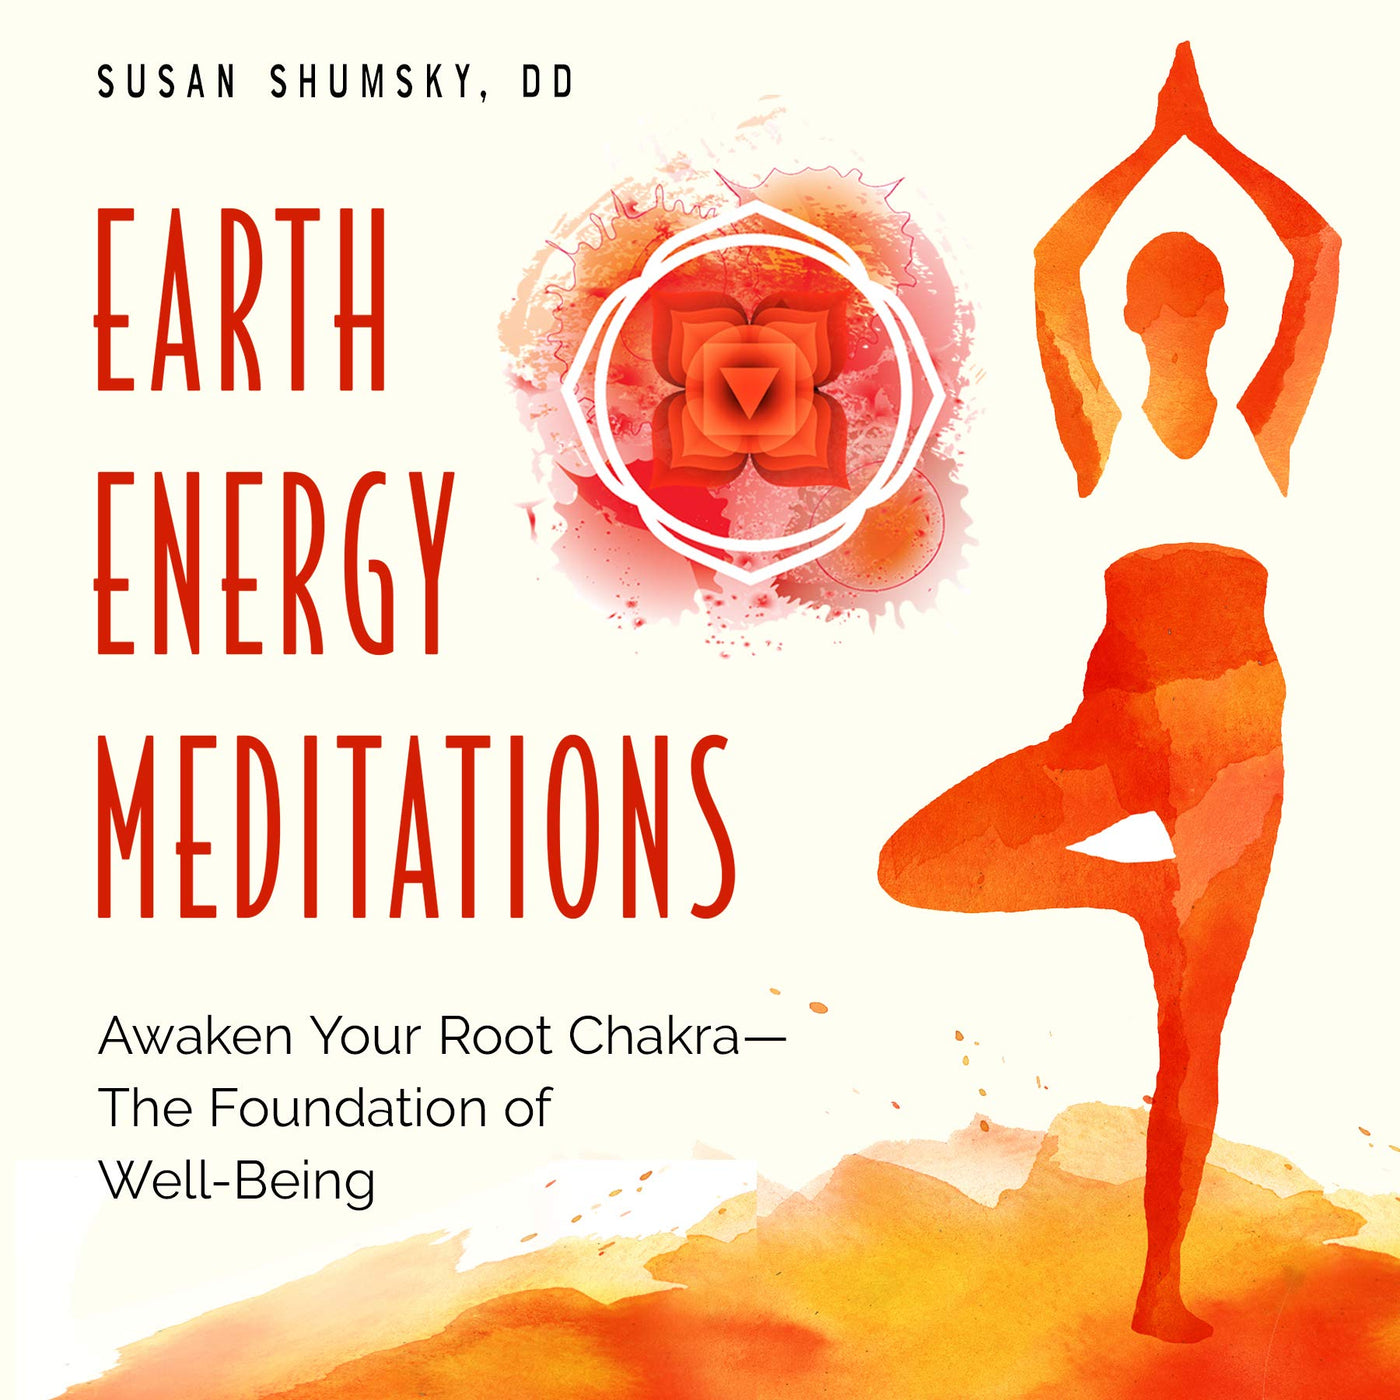 Earth Energy Meditations